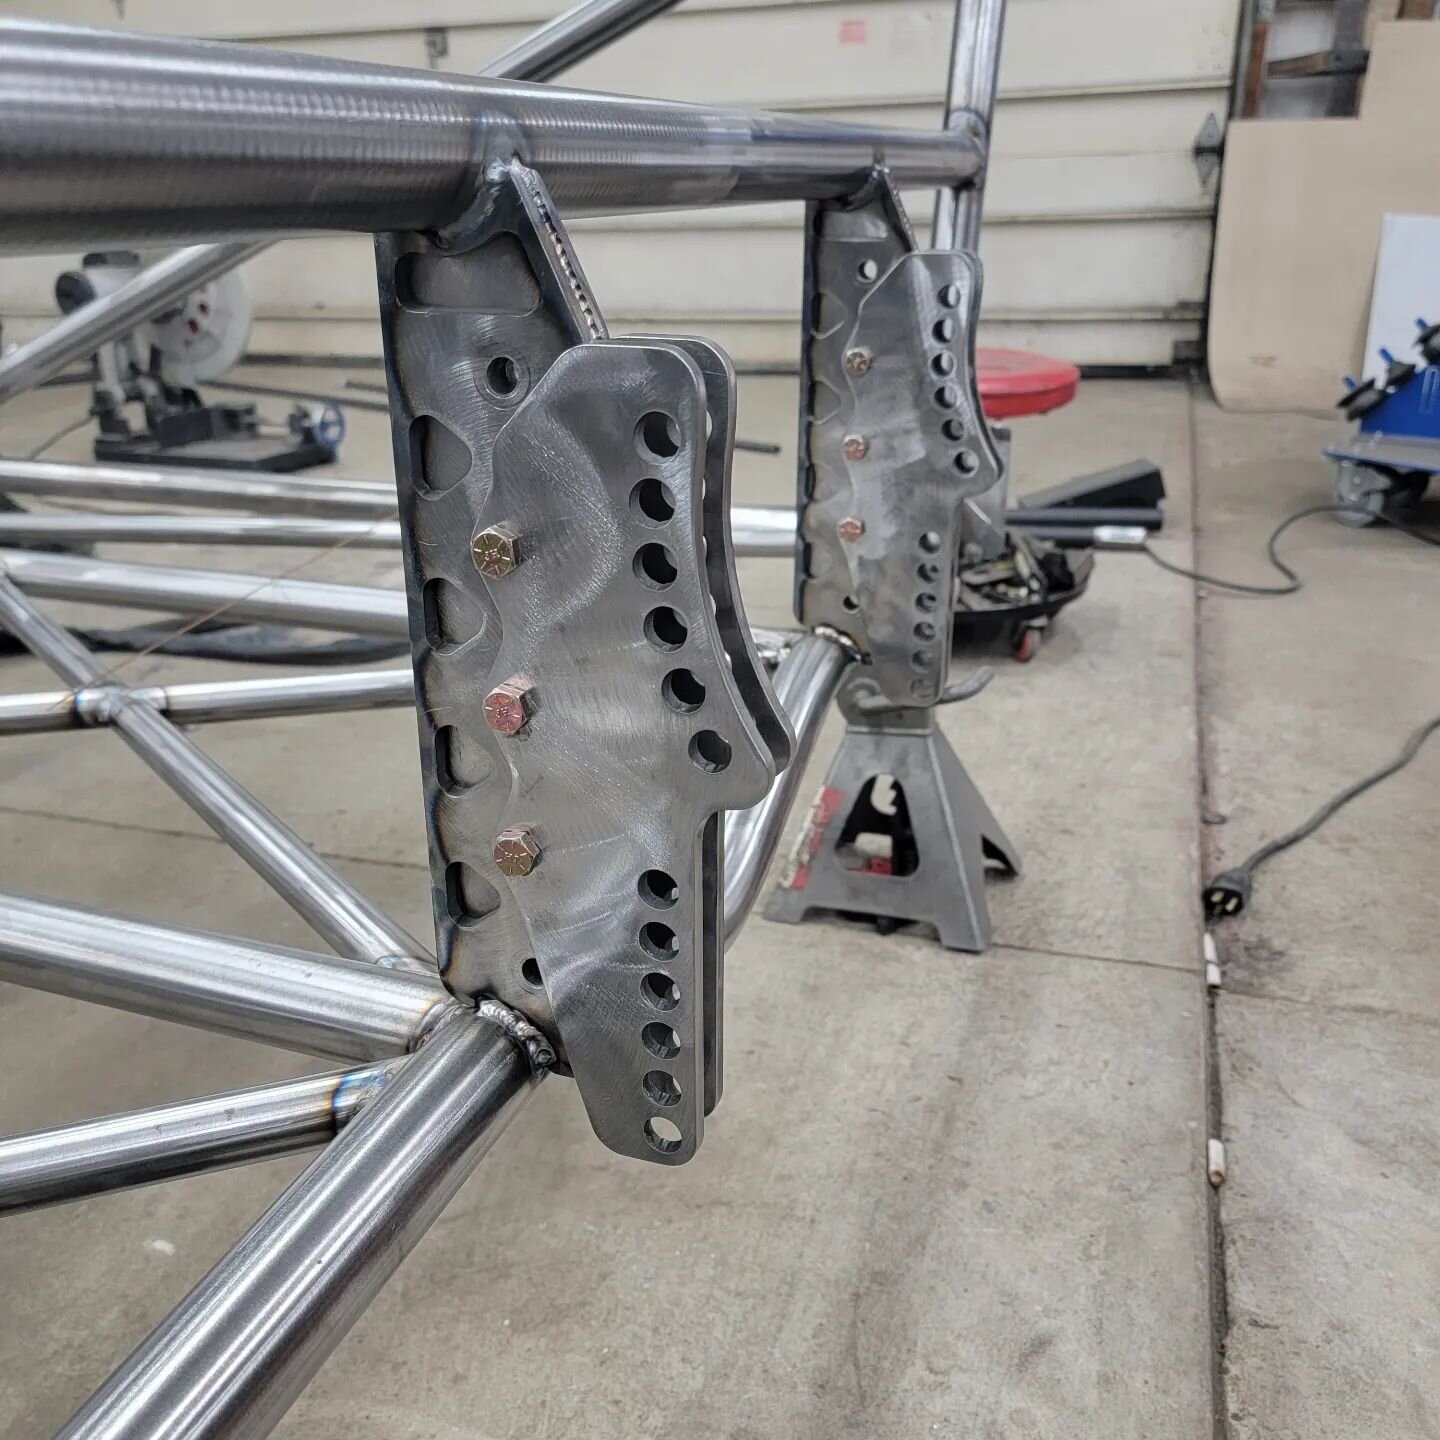 Out new high adjustability 4 link brackets. #fabrication #racecar #4link